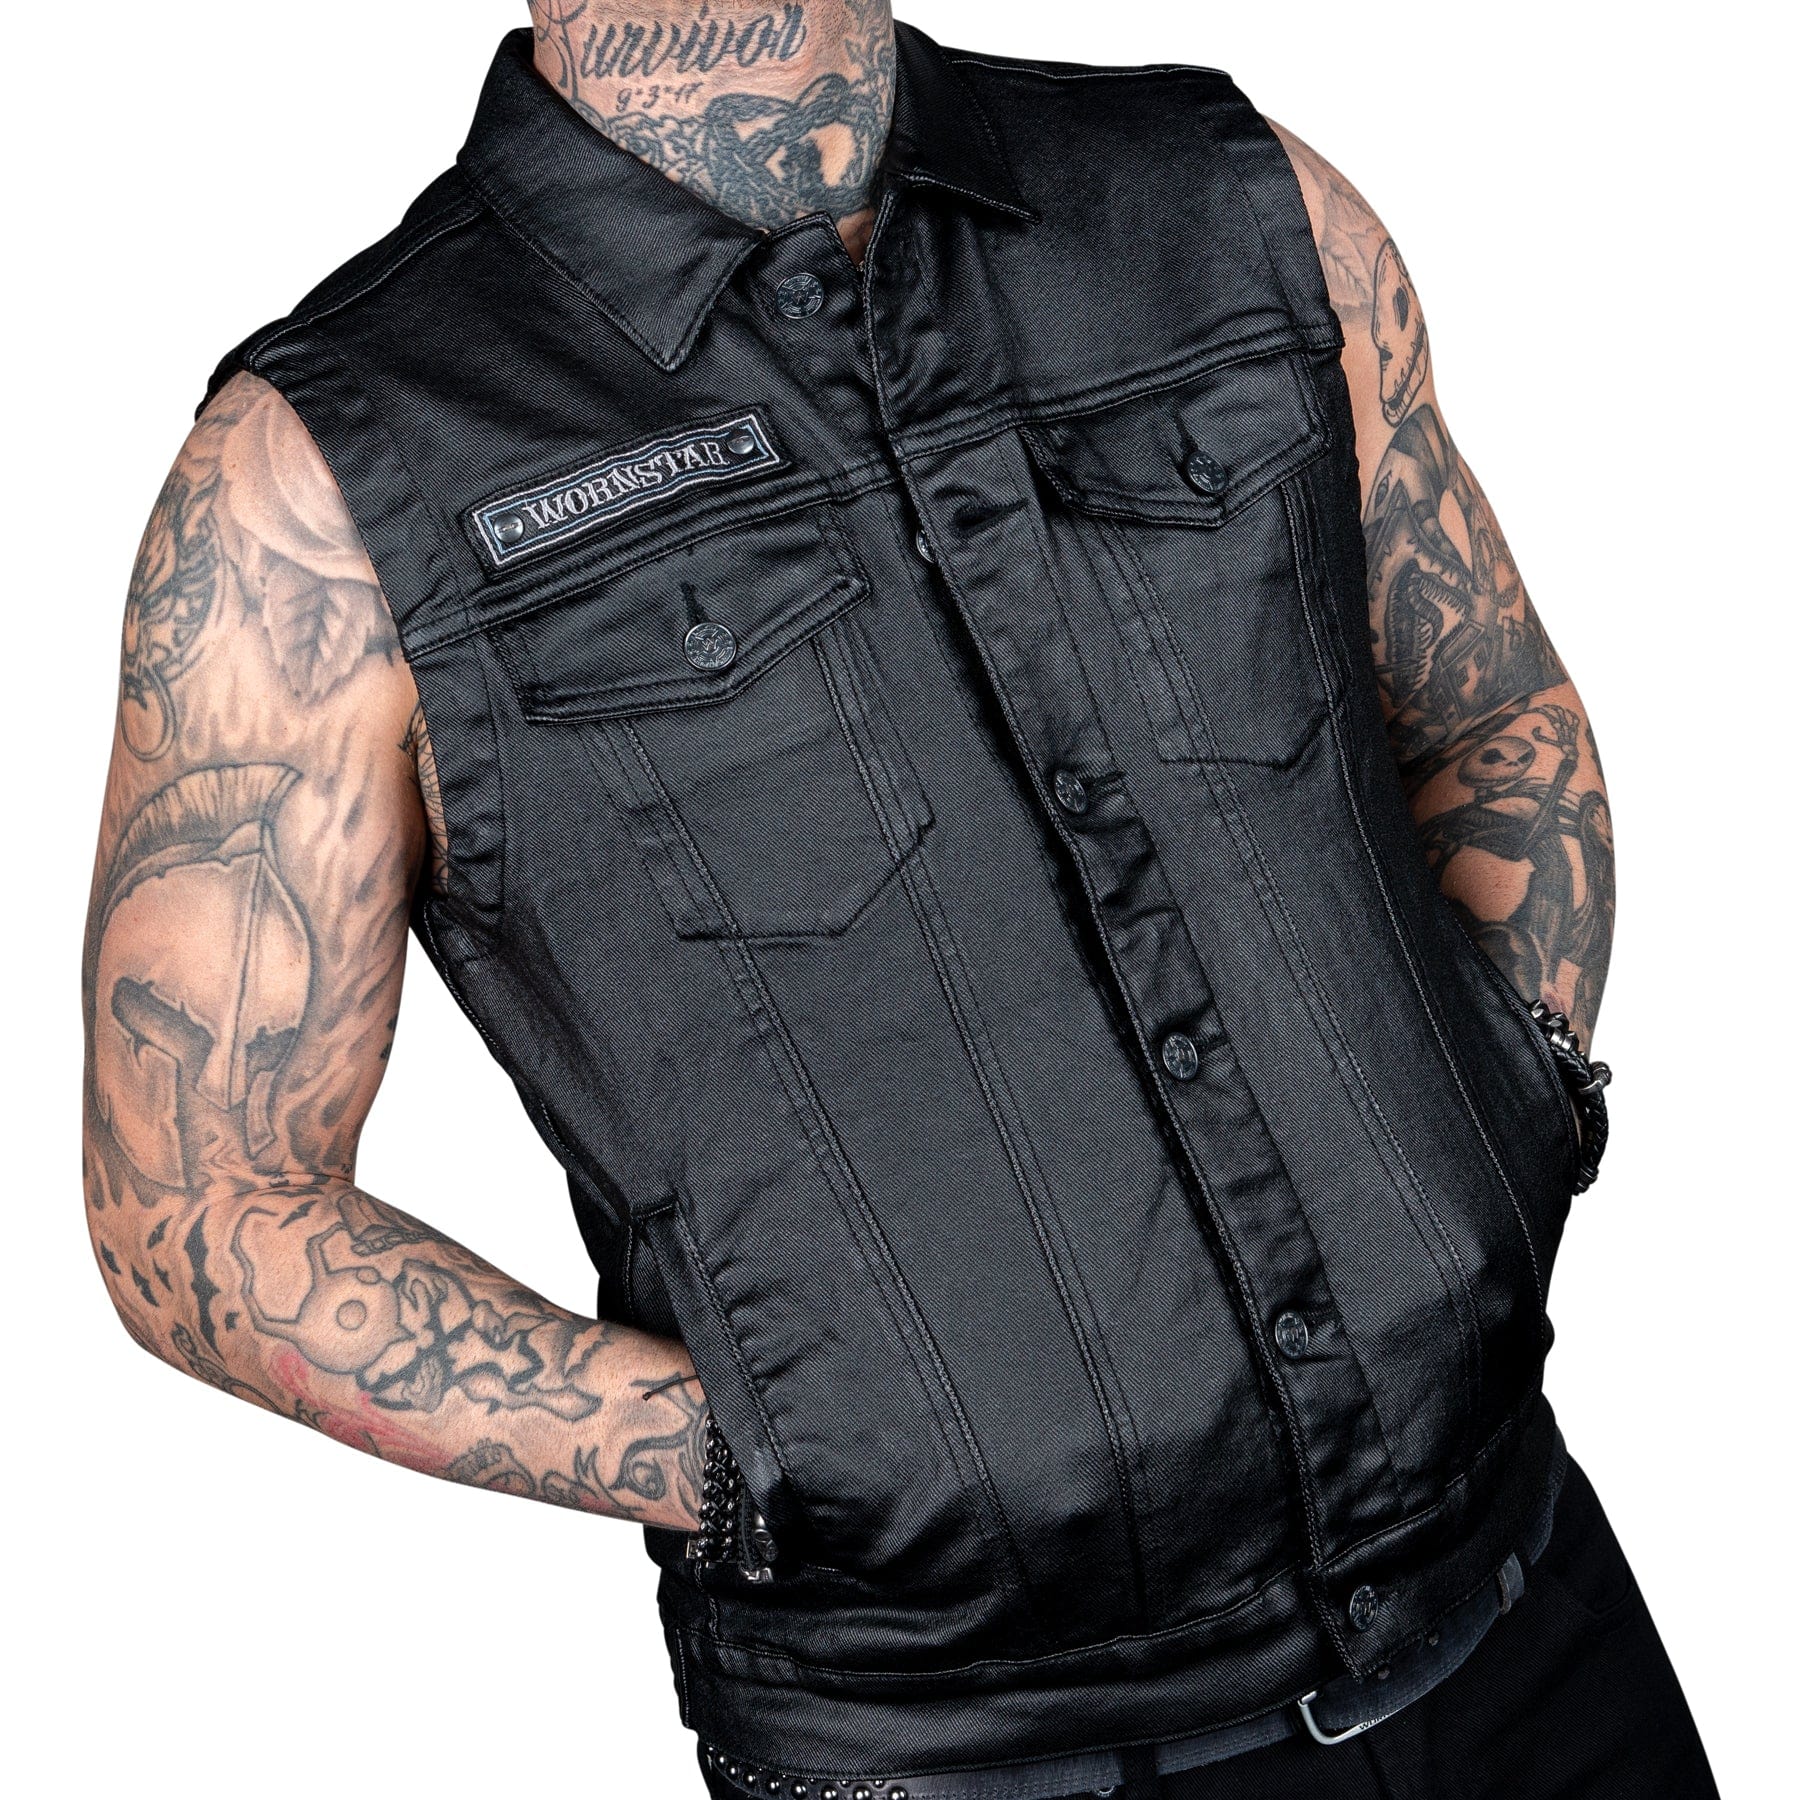 Wornstar Clothing Idolmaker Mens Waxed Denim Vest - Black